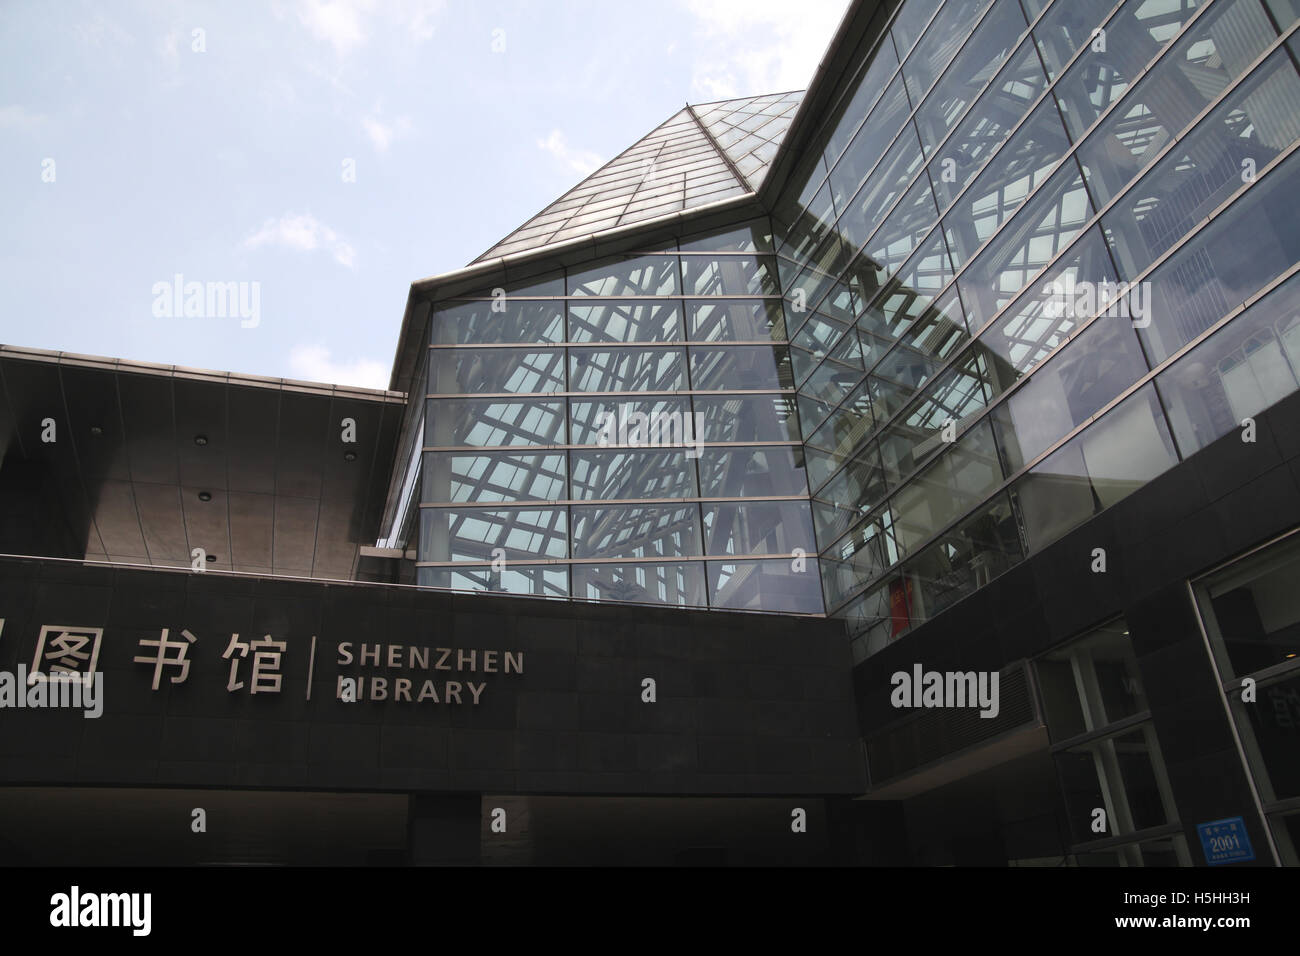 L'ingresso e le pareti di vetro della Shenzhen libreria progettata da Arata Isozaki. Shenzhen, Cina. 05.05.2016. Foto Stock